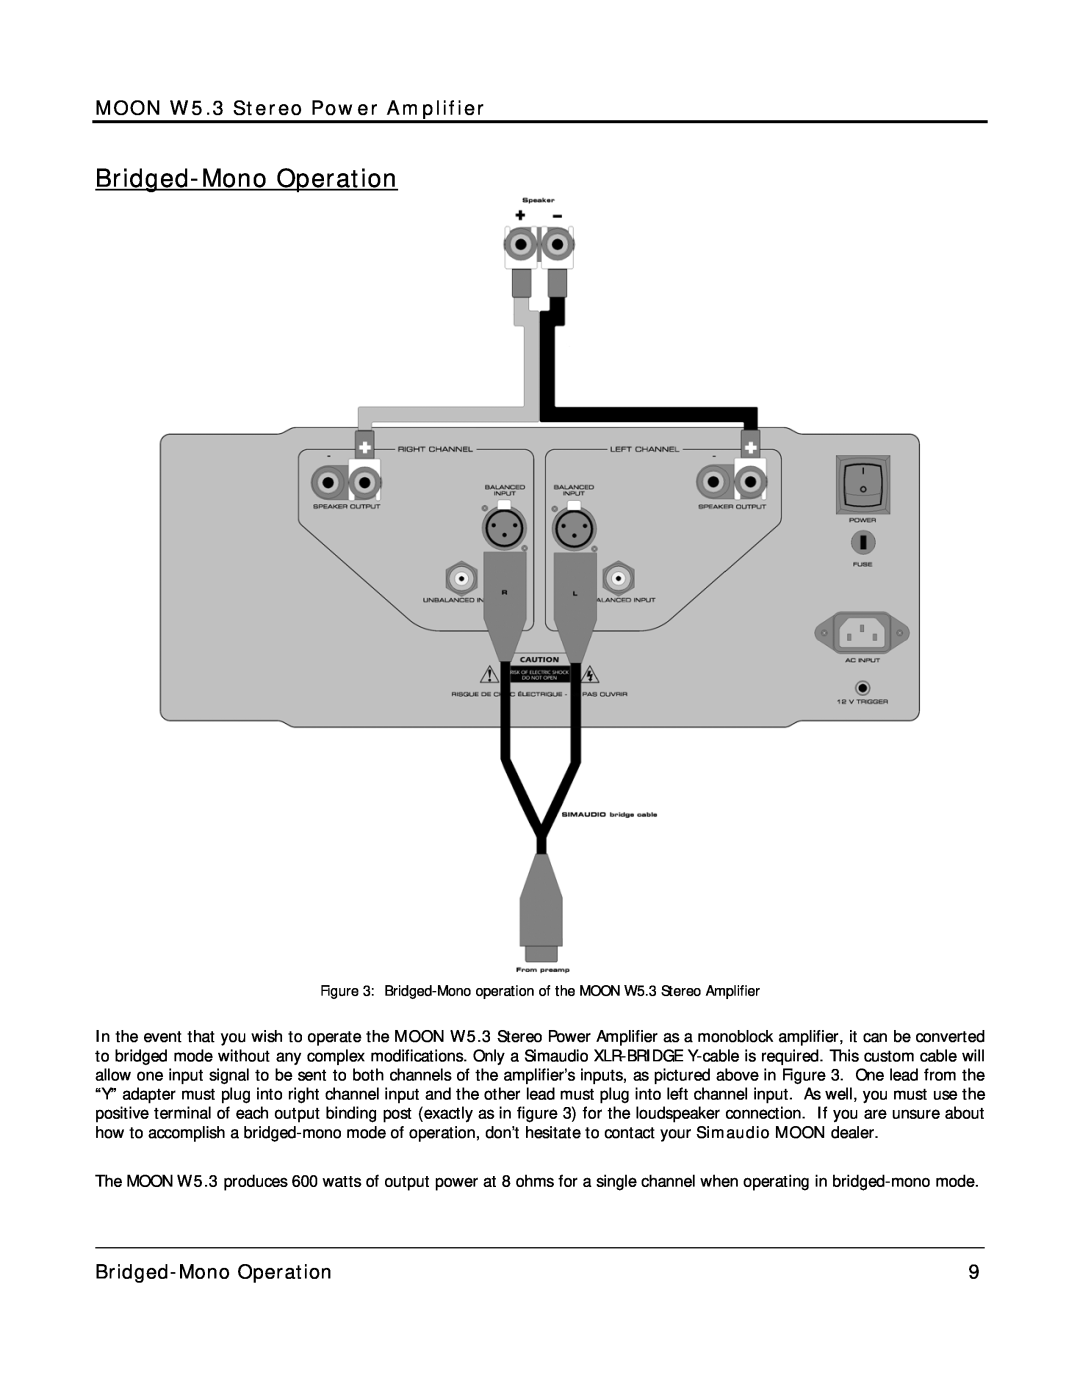 Simaudio owner manual Bridged-MonoOperation, MOON W5.3 Stereo Power Amplifier 